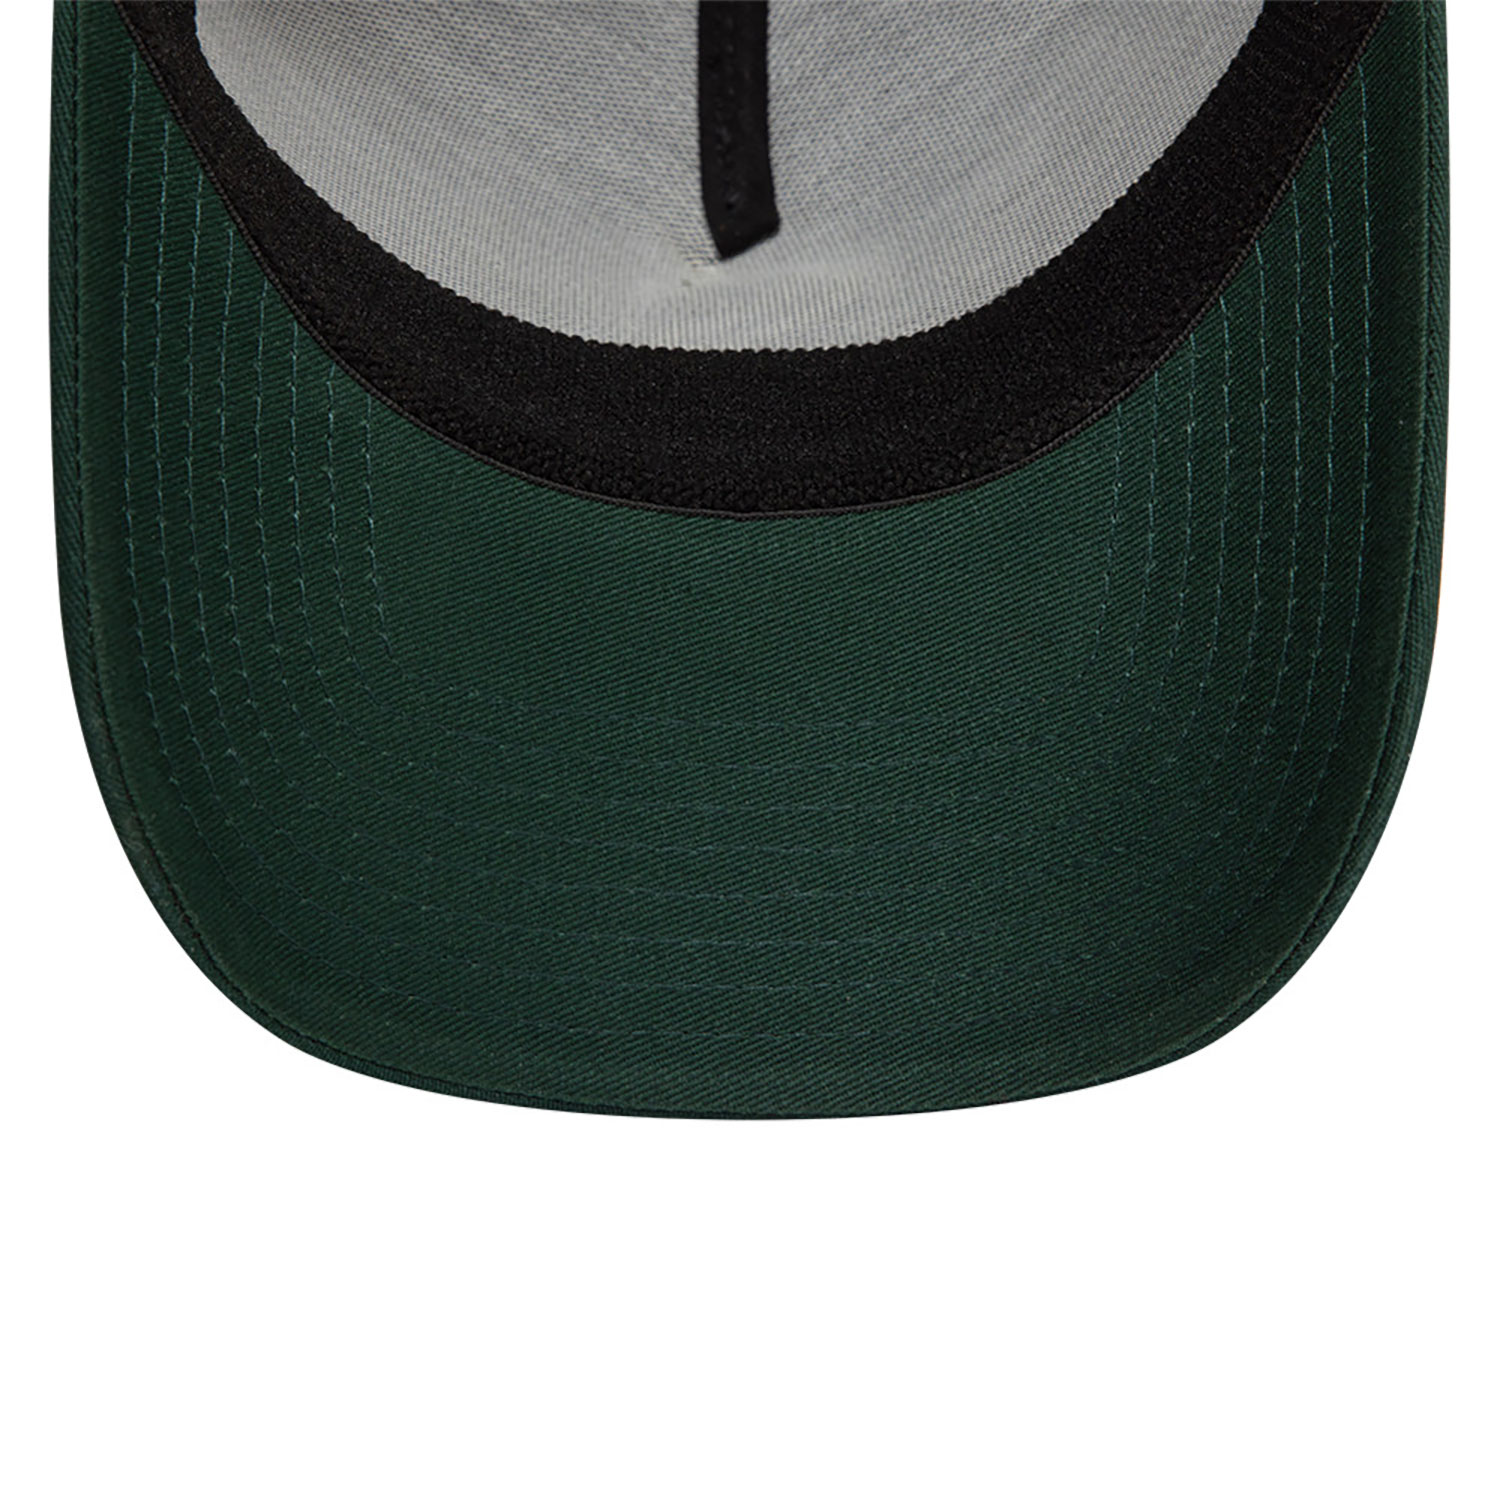 Chicago White Sox League Essential Dark Green 39THIRTY A-Frame Stretch Fit Cap